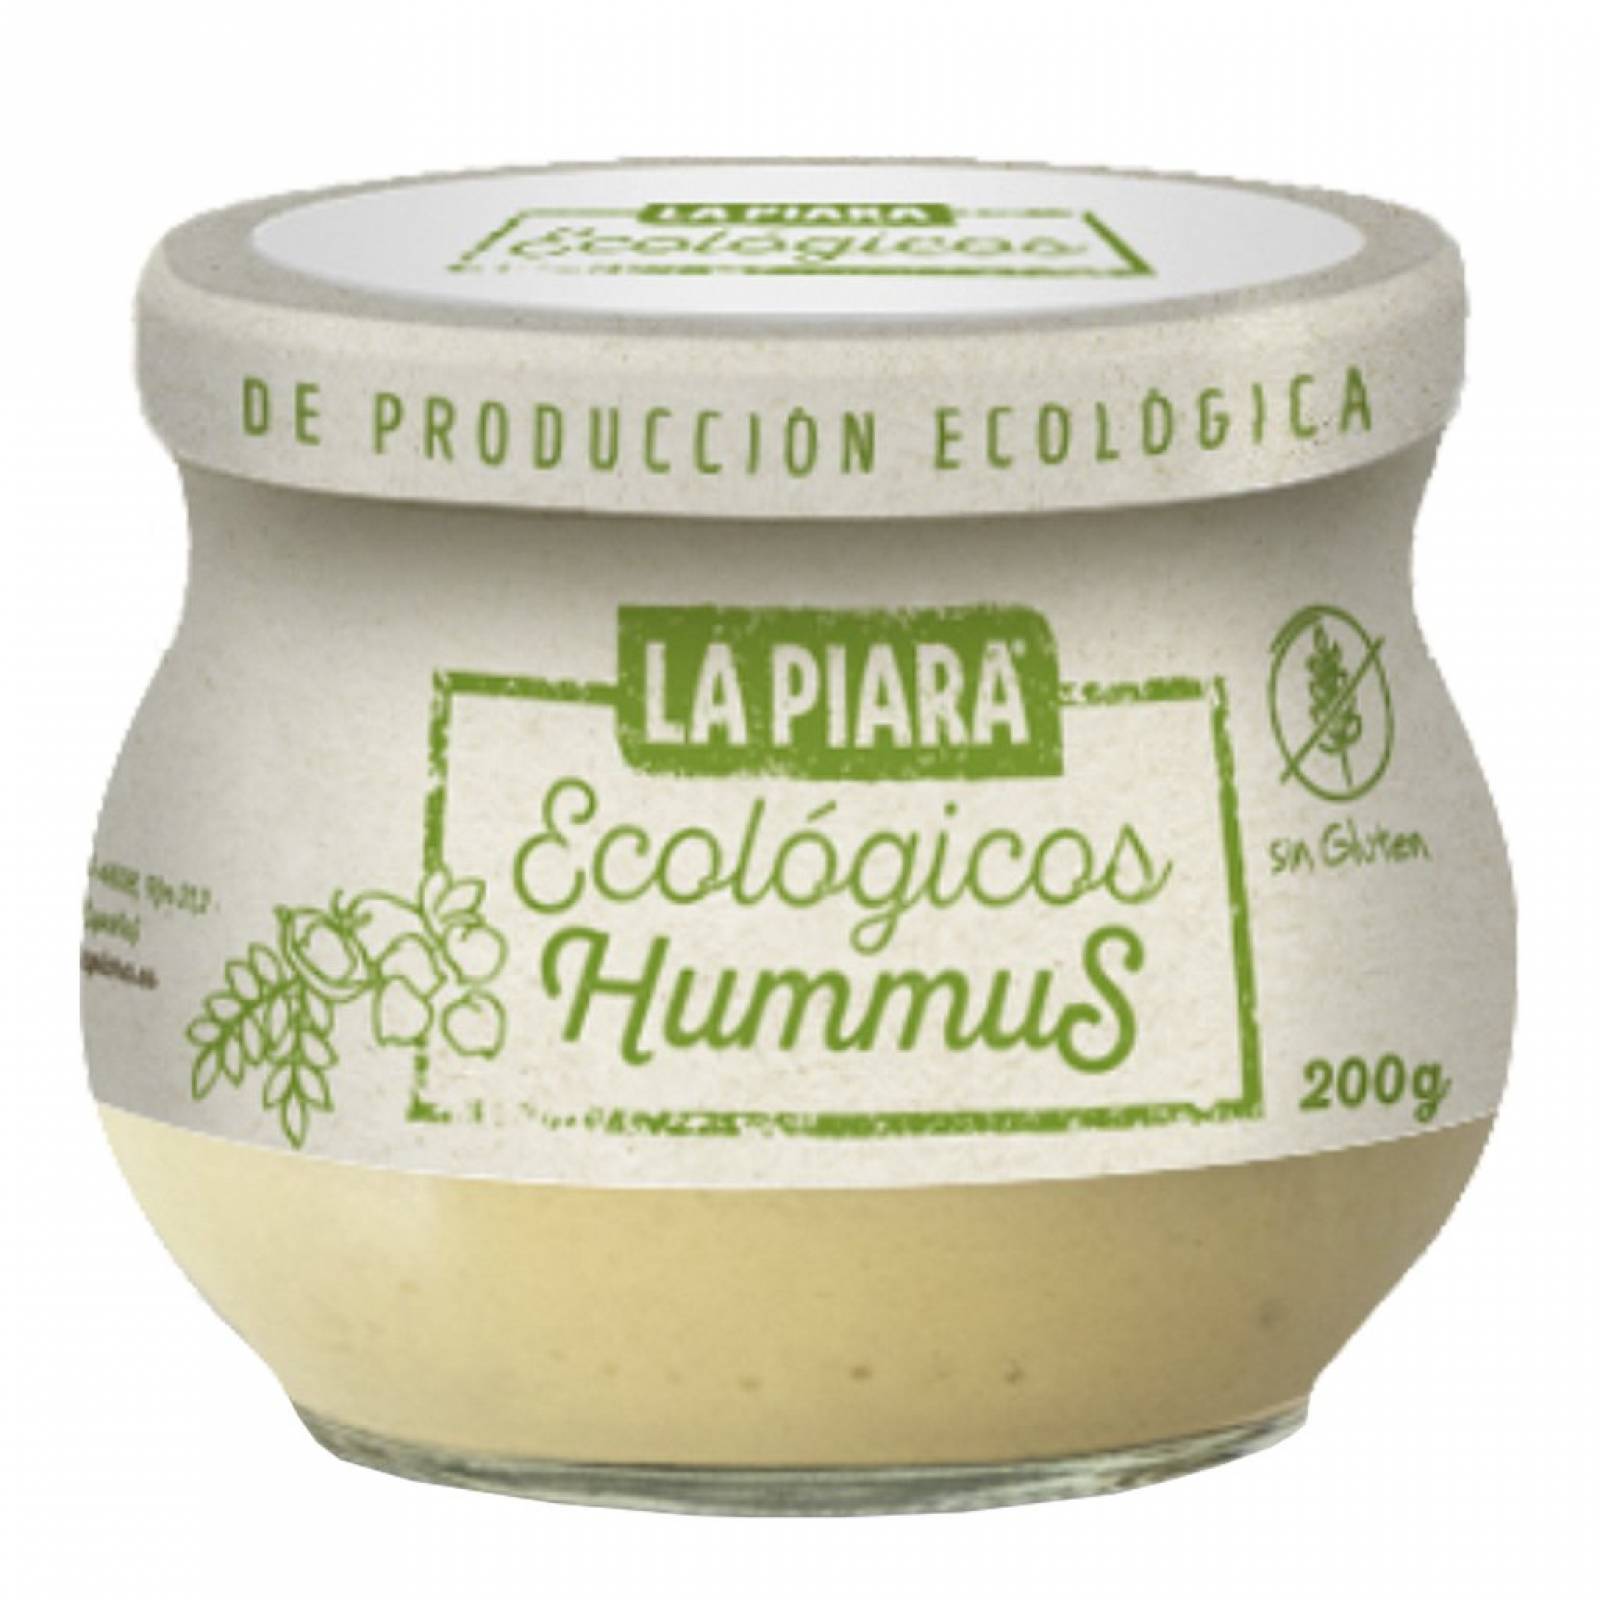 Hummus La Piara ecológico receta tradicional 200 g